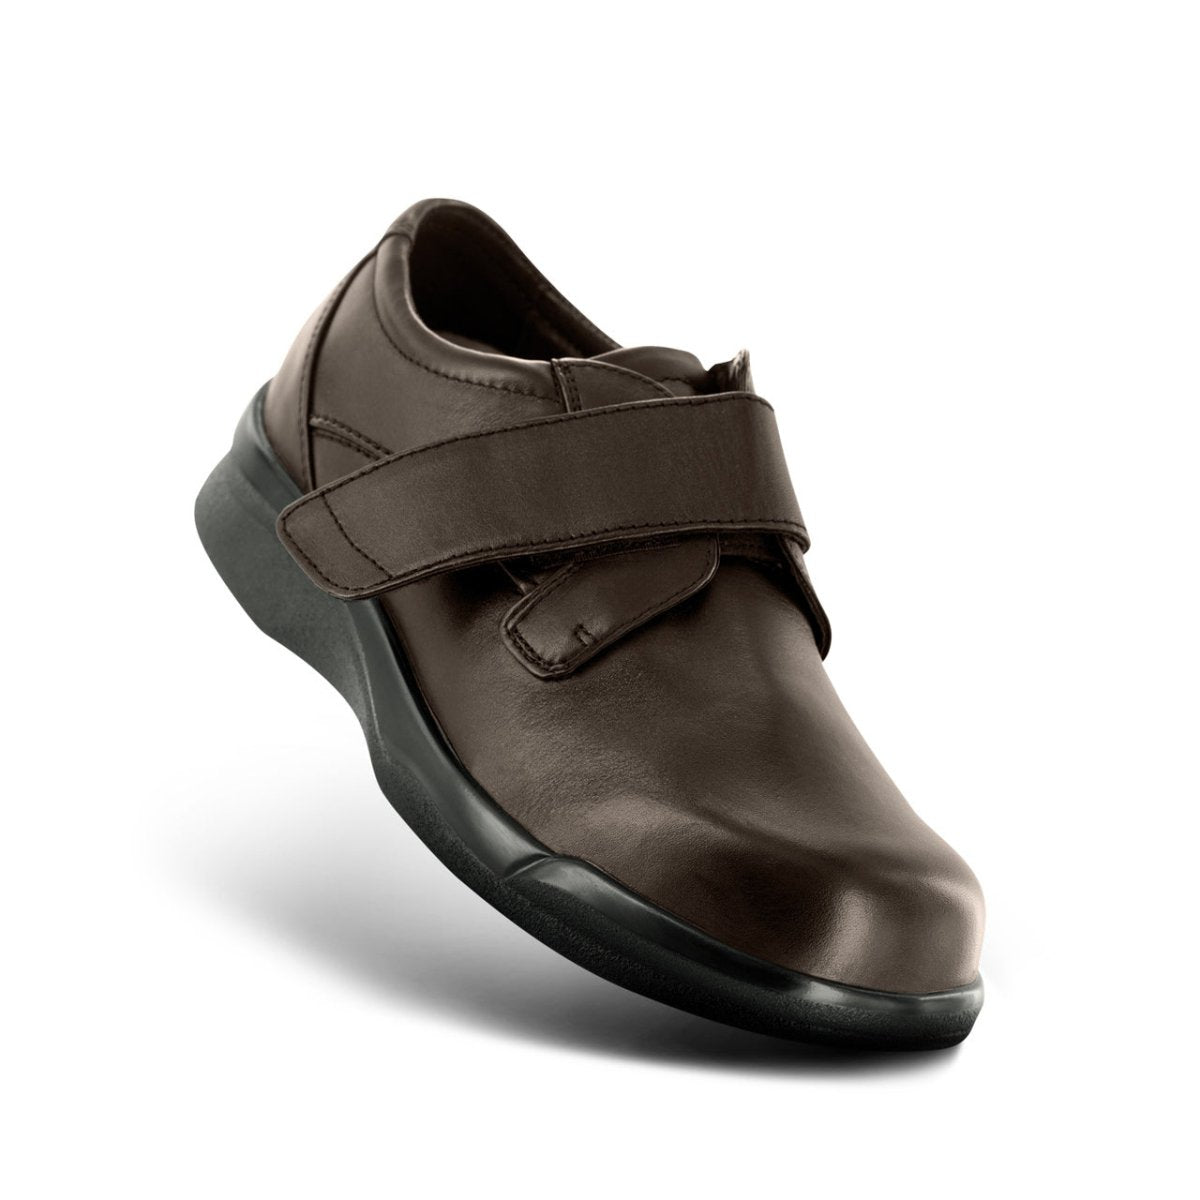 APEX B3100M BIOMECHANICAL SINGLE STRAP MEN'S CASUAL SHOE IN BROWN - TLW Shoes